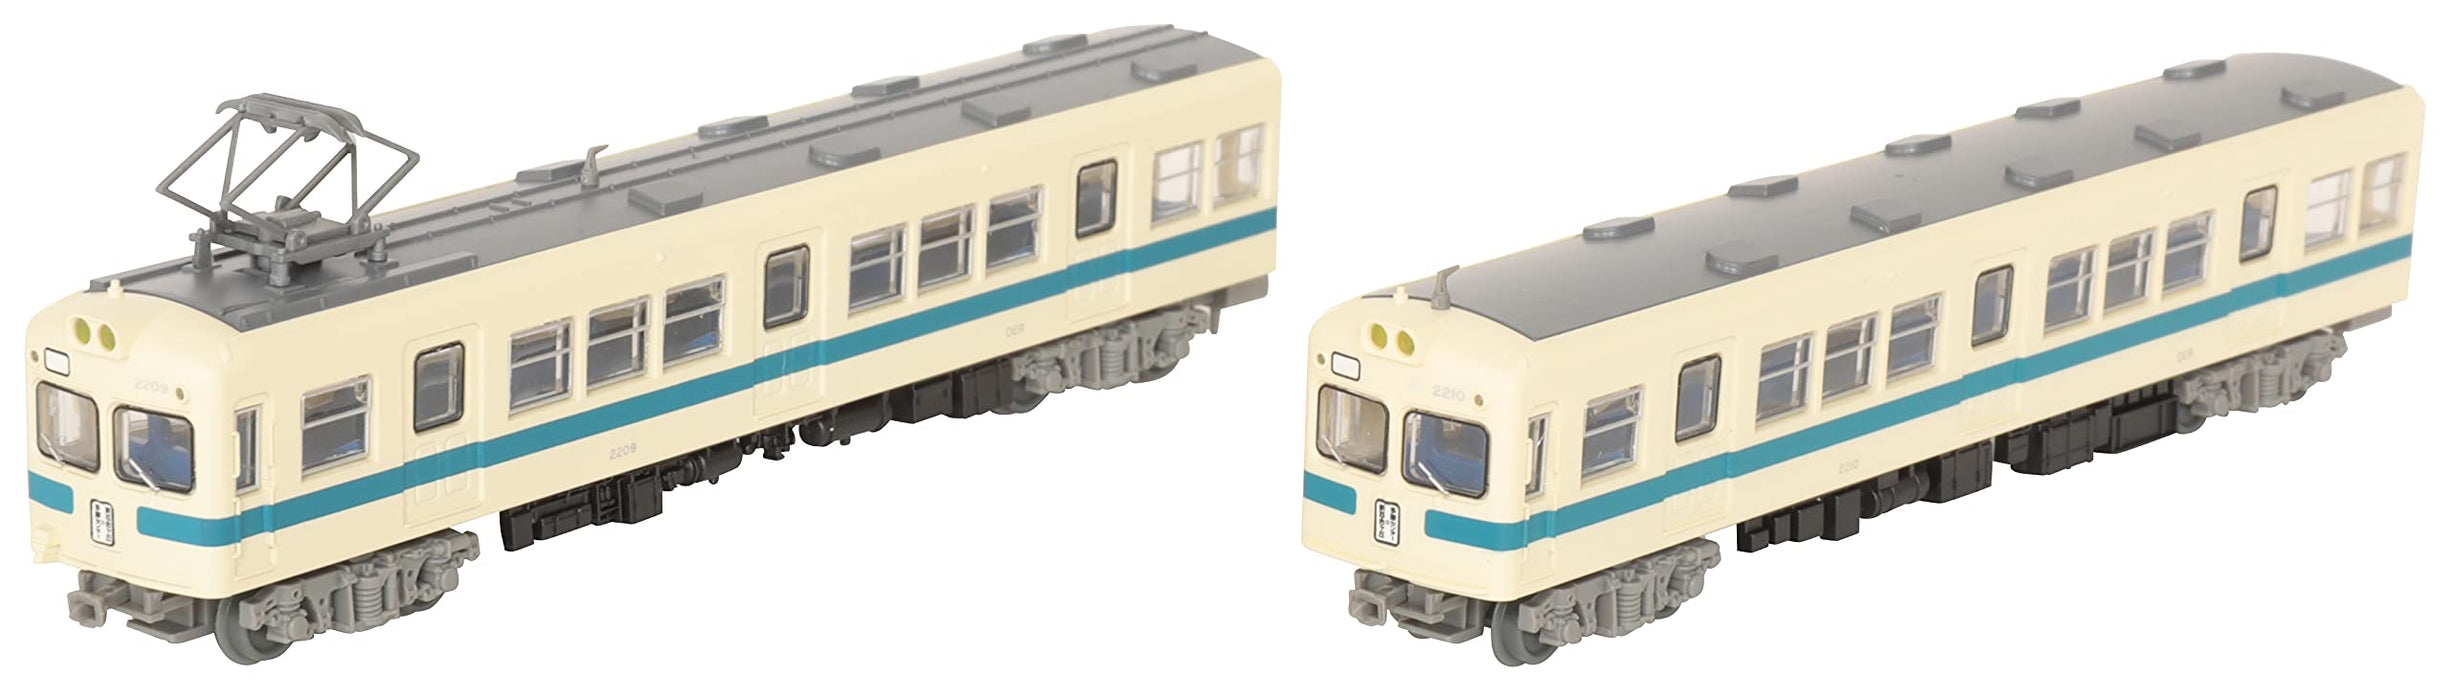 Tomytec Railway Collection - Odakyu Electric Railway Type 2200 Coffret de 2 voitures A Production limitée 316350